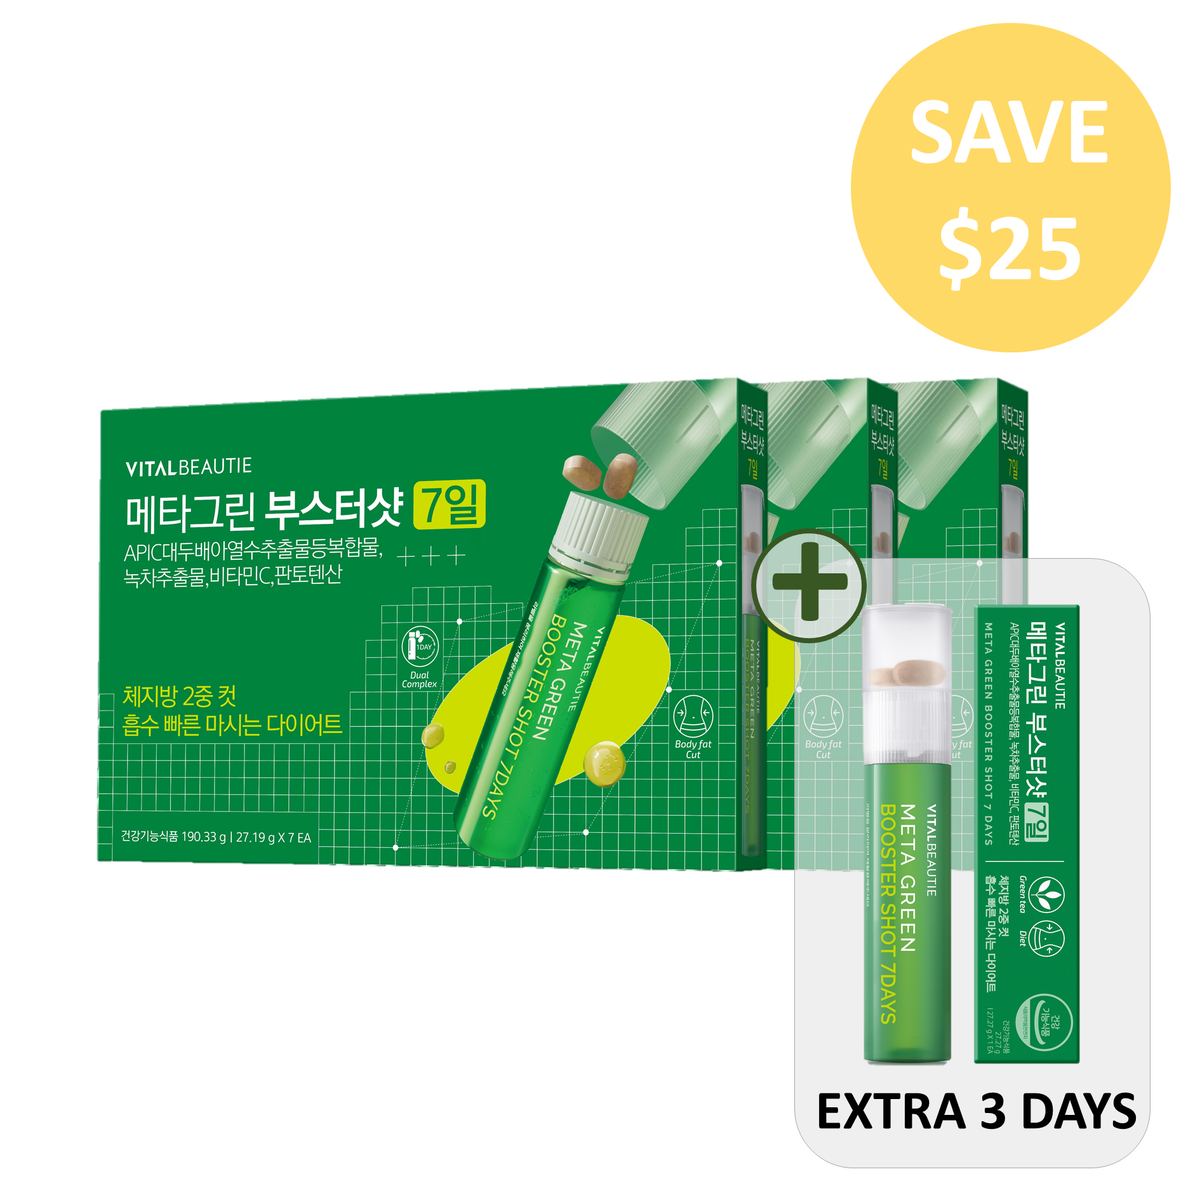 [SAVE $25] VITALBEAUTIE Meta Green Booster shot 7days x 3 boxes + 3 days extra